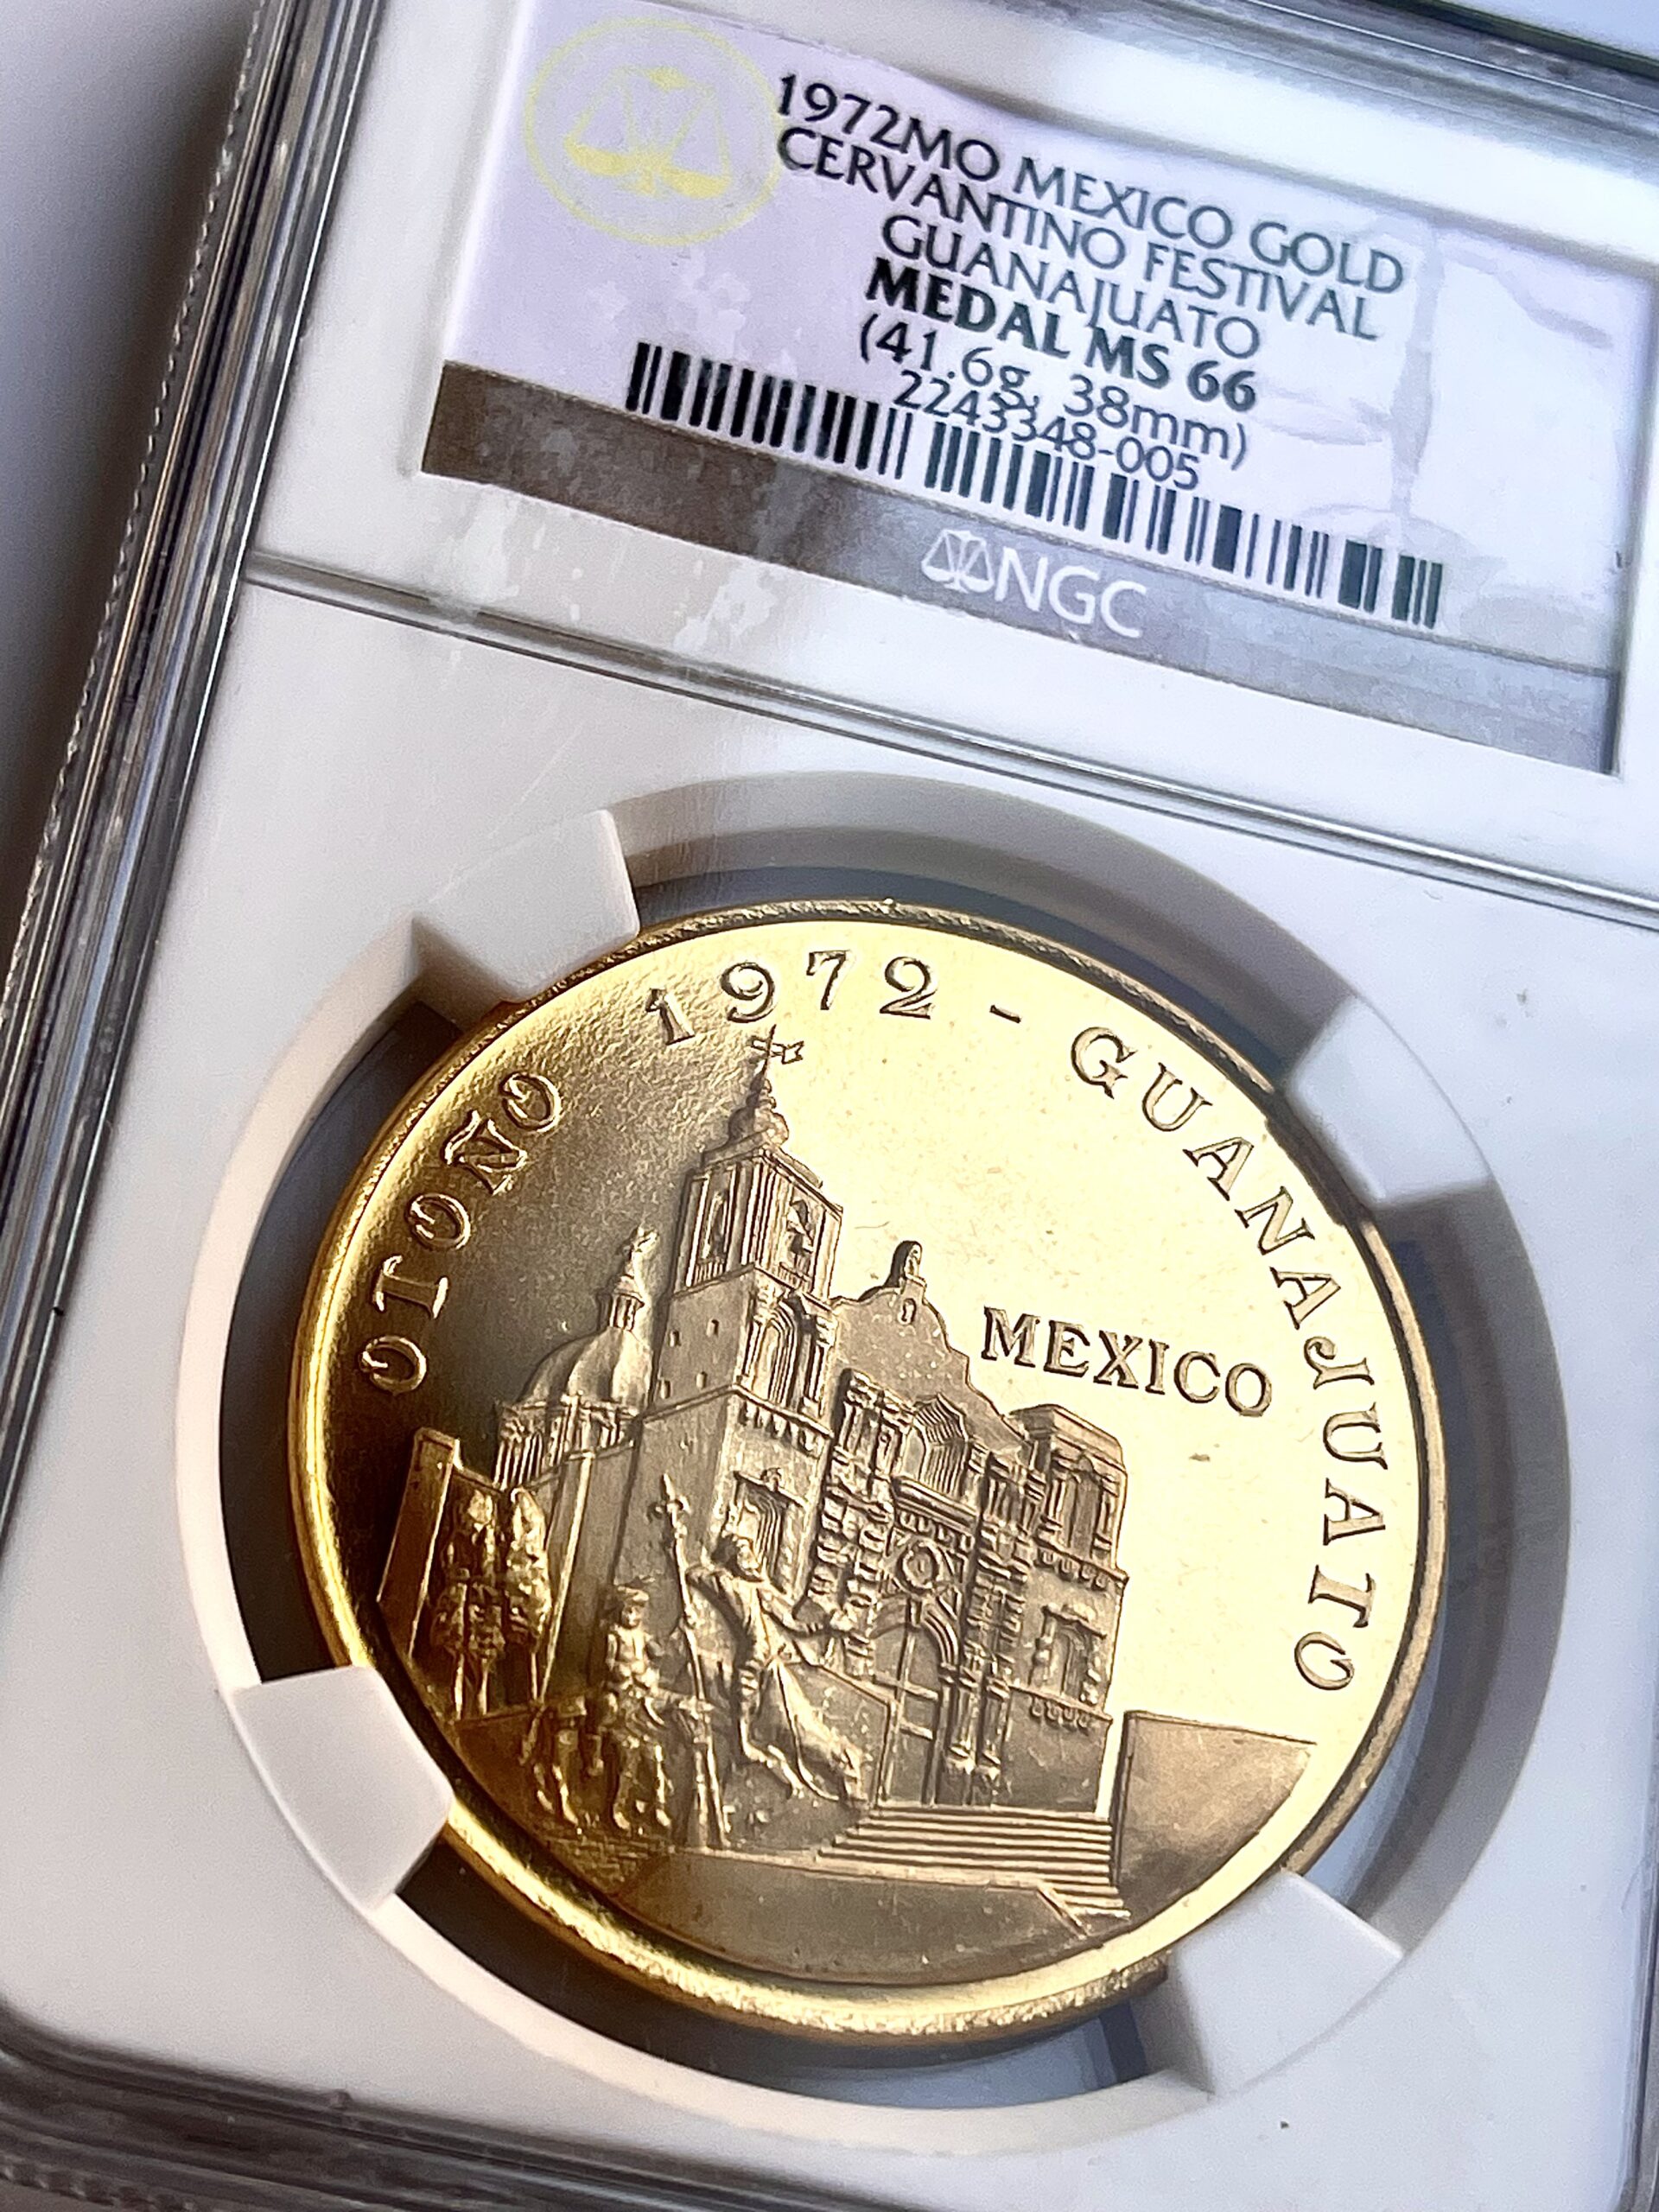 Mexiko Guanajuato Cervantino Festival Gold Medal 1972 NGC MS66